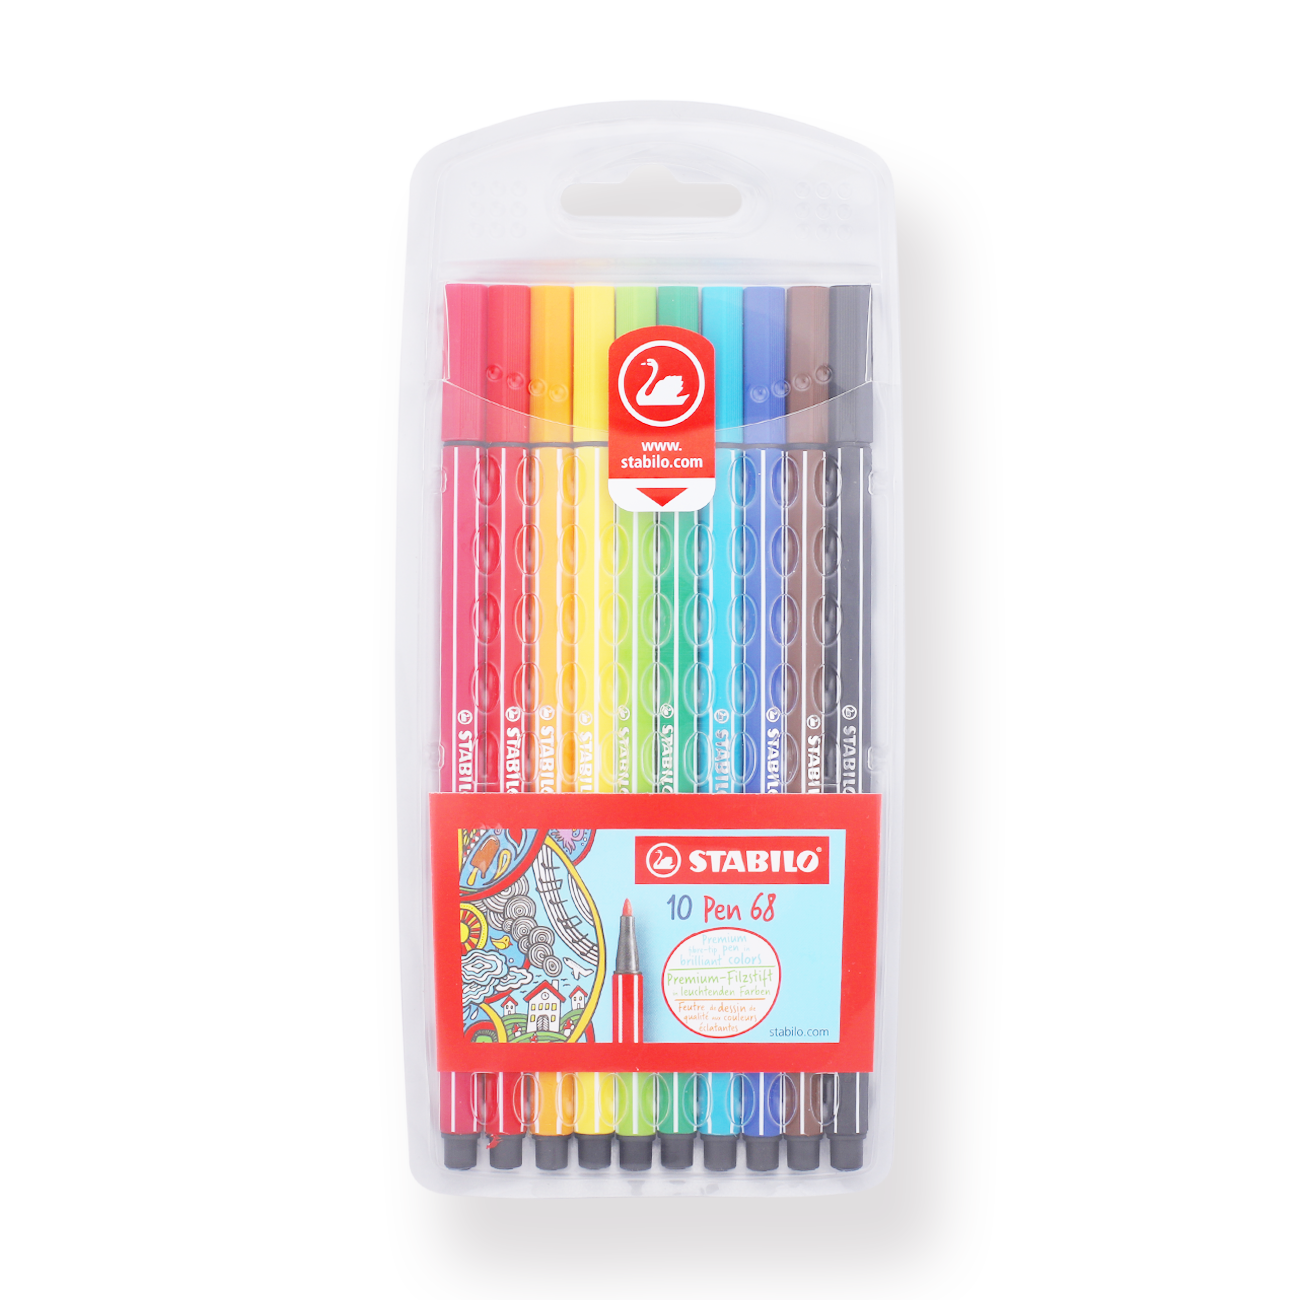 Premium felt-tip pen STABILO Pen 68 - pack of 10 colors